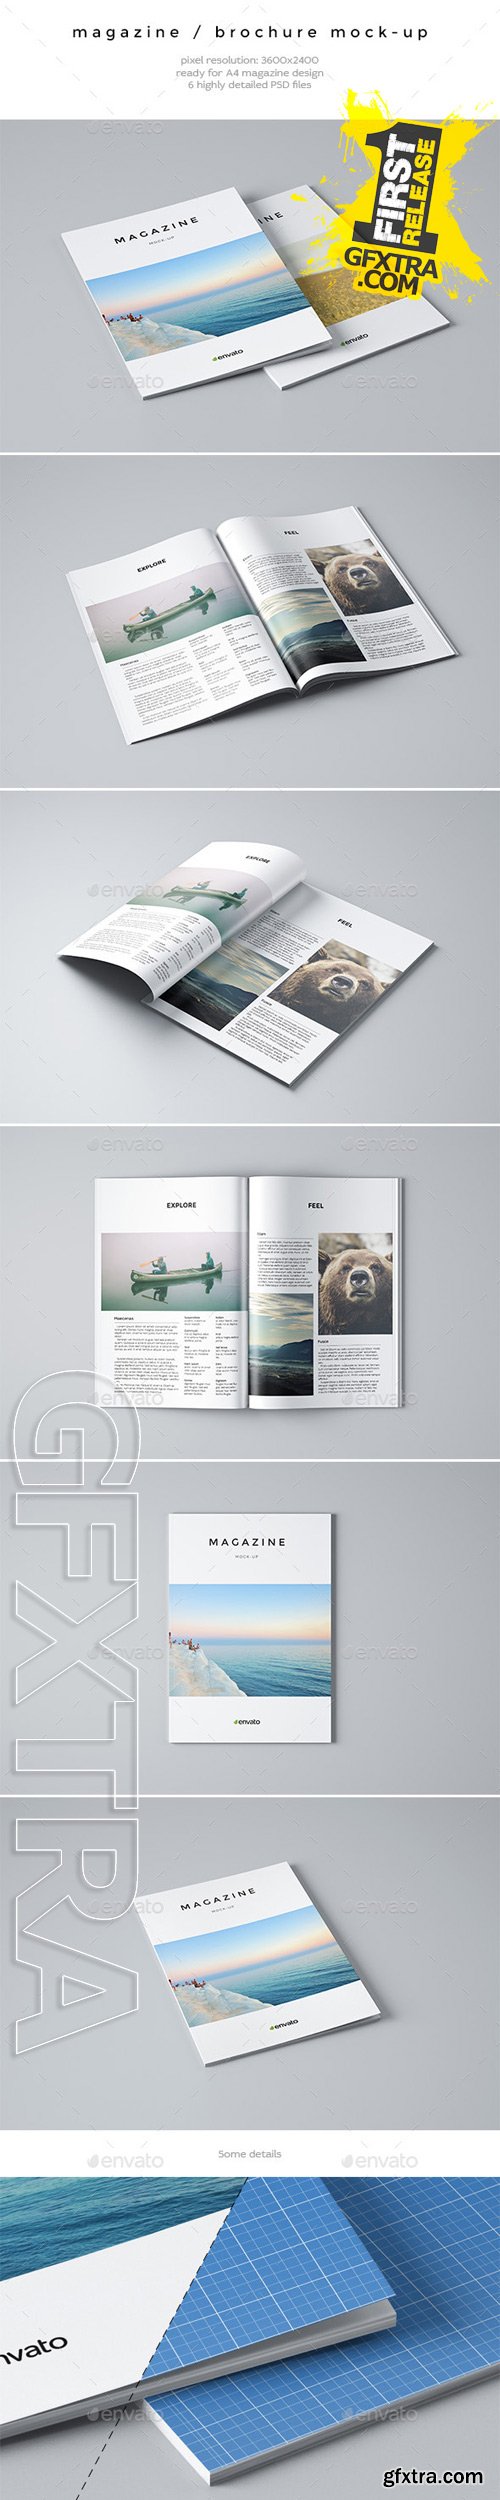 GraphicRiver - Magazine / Brochure Mock-Up 9445696